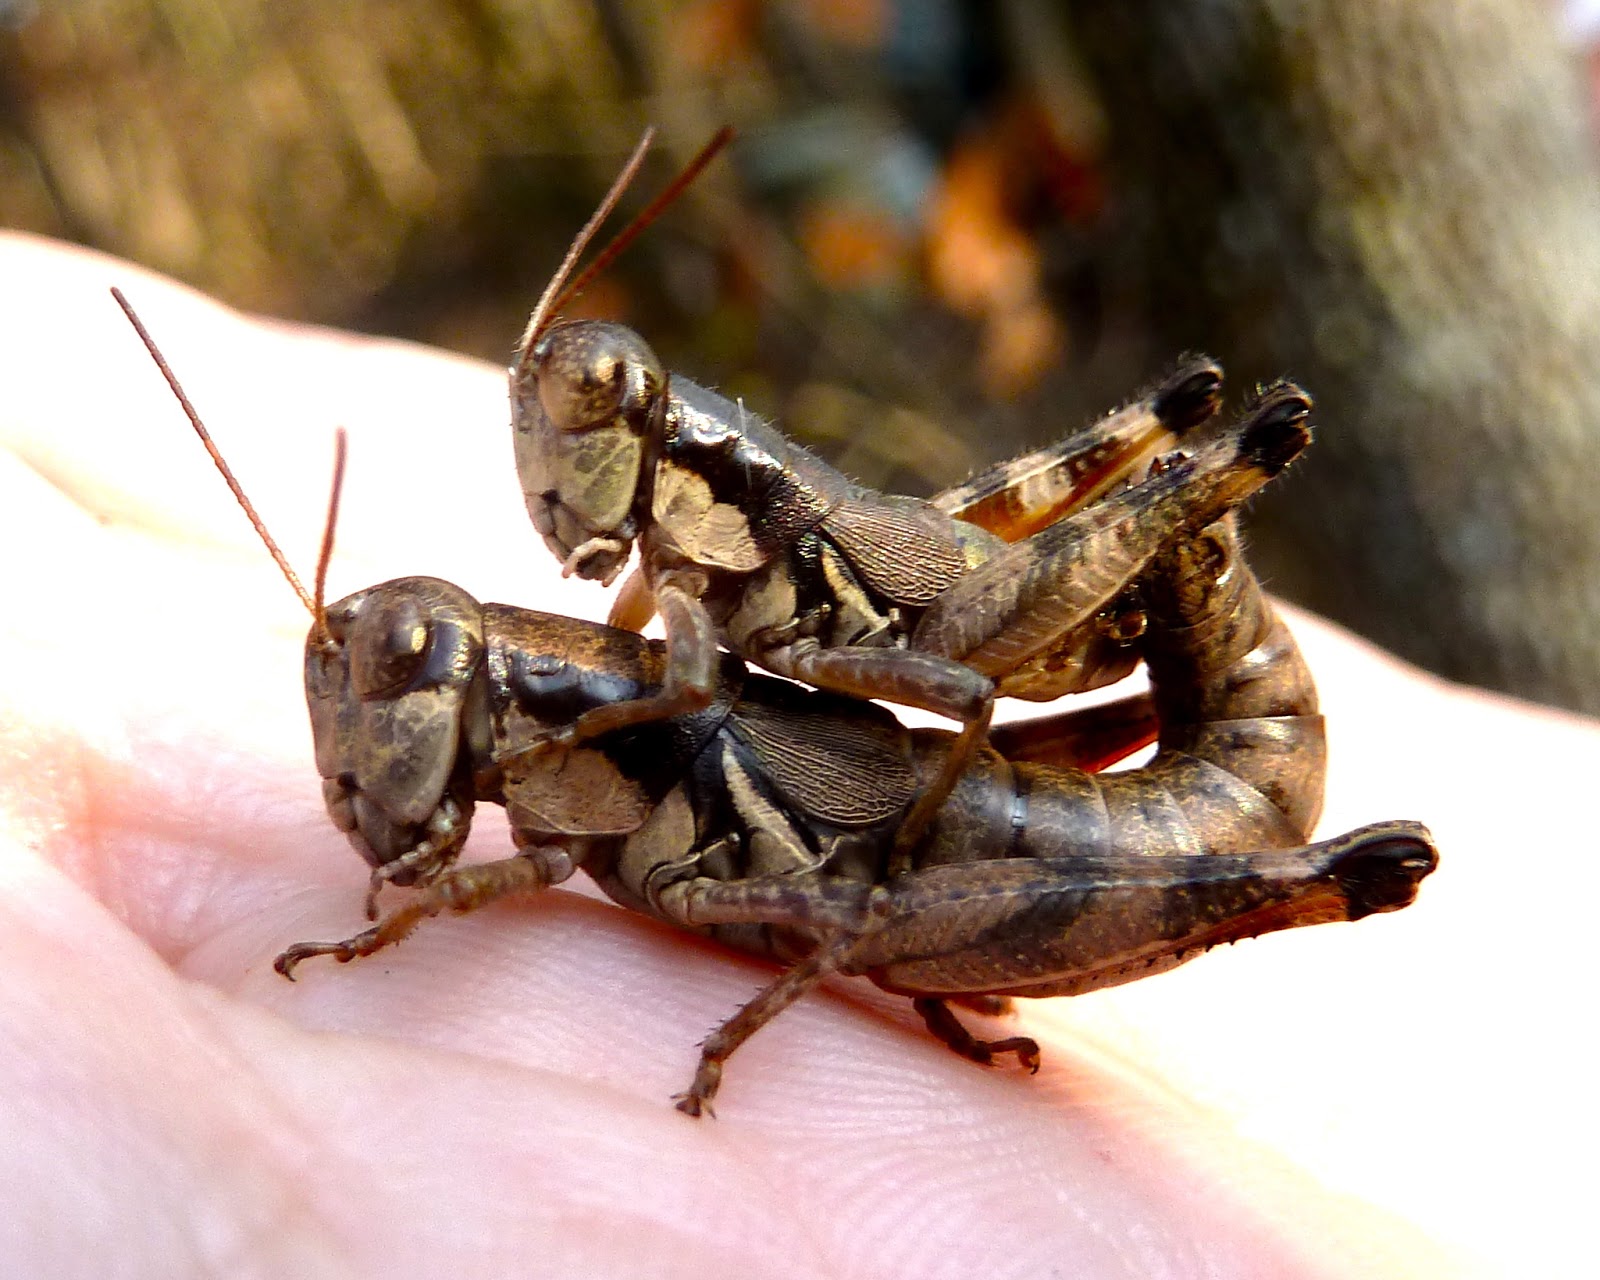 Springfield Plateau: Grasshopper Mating